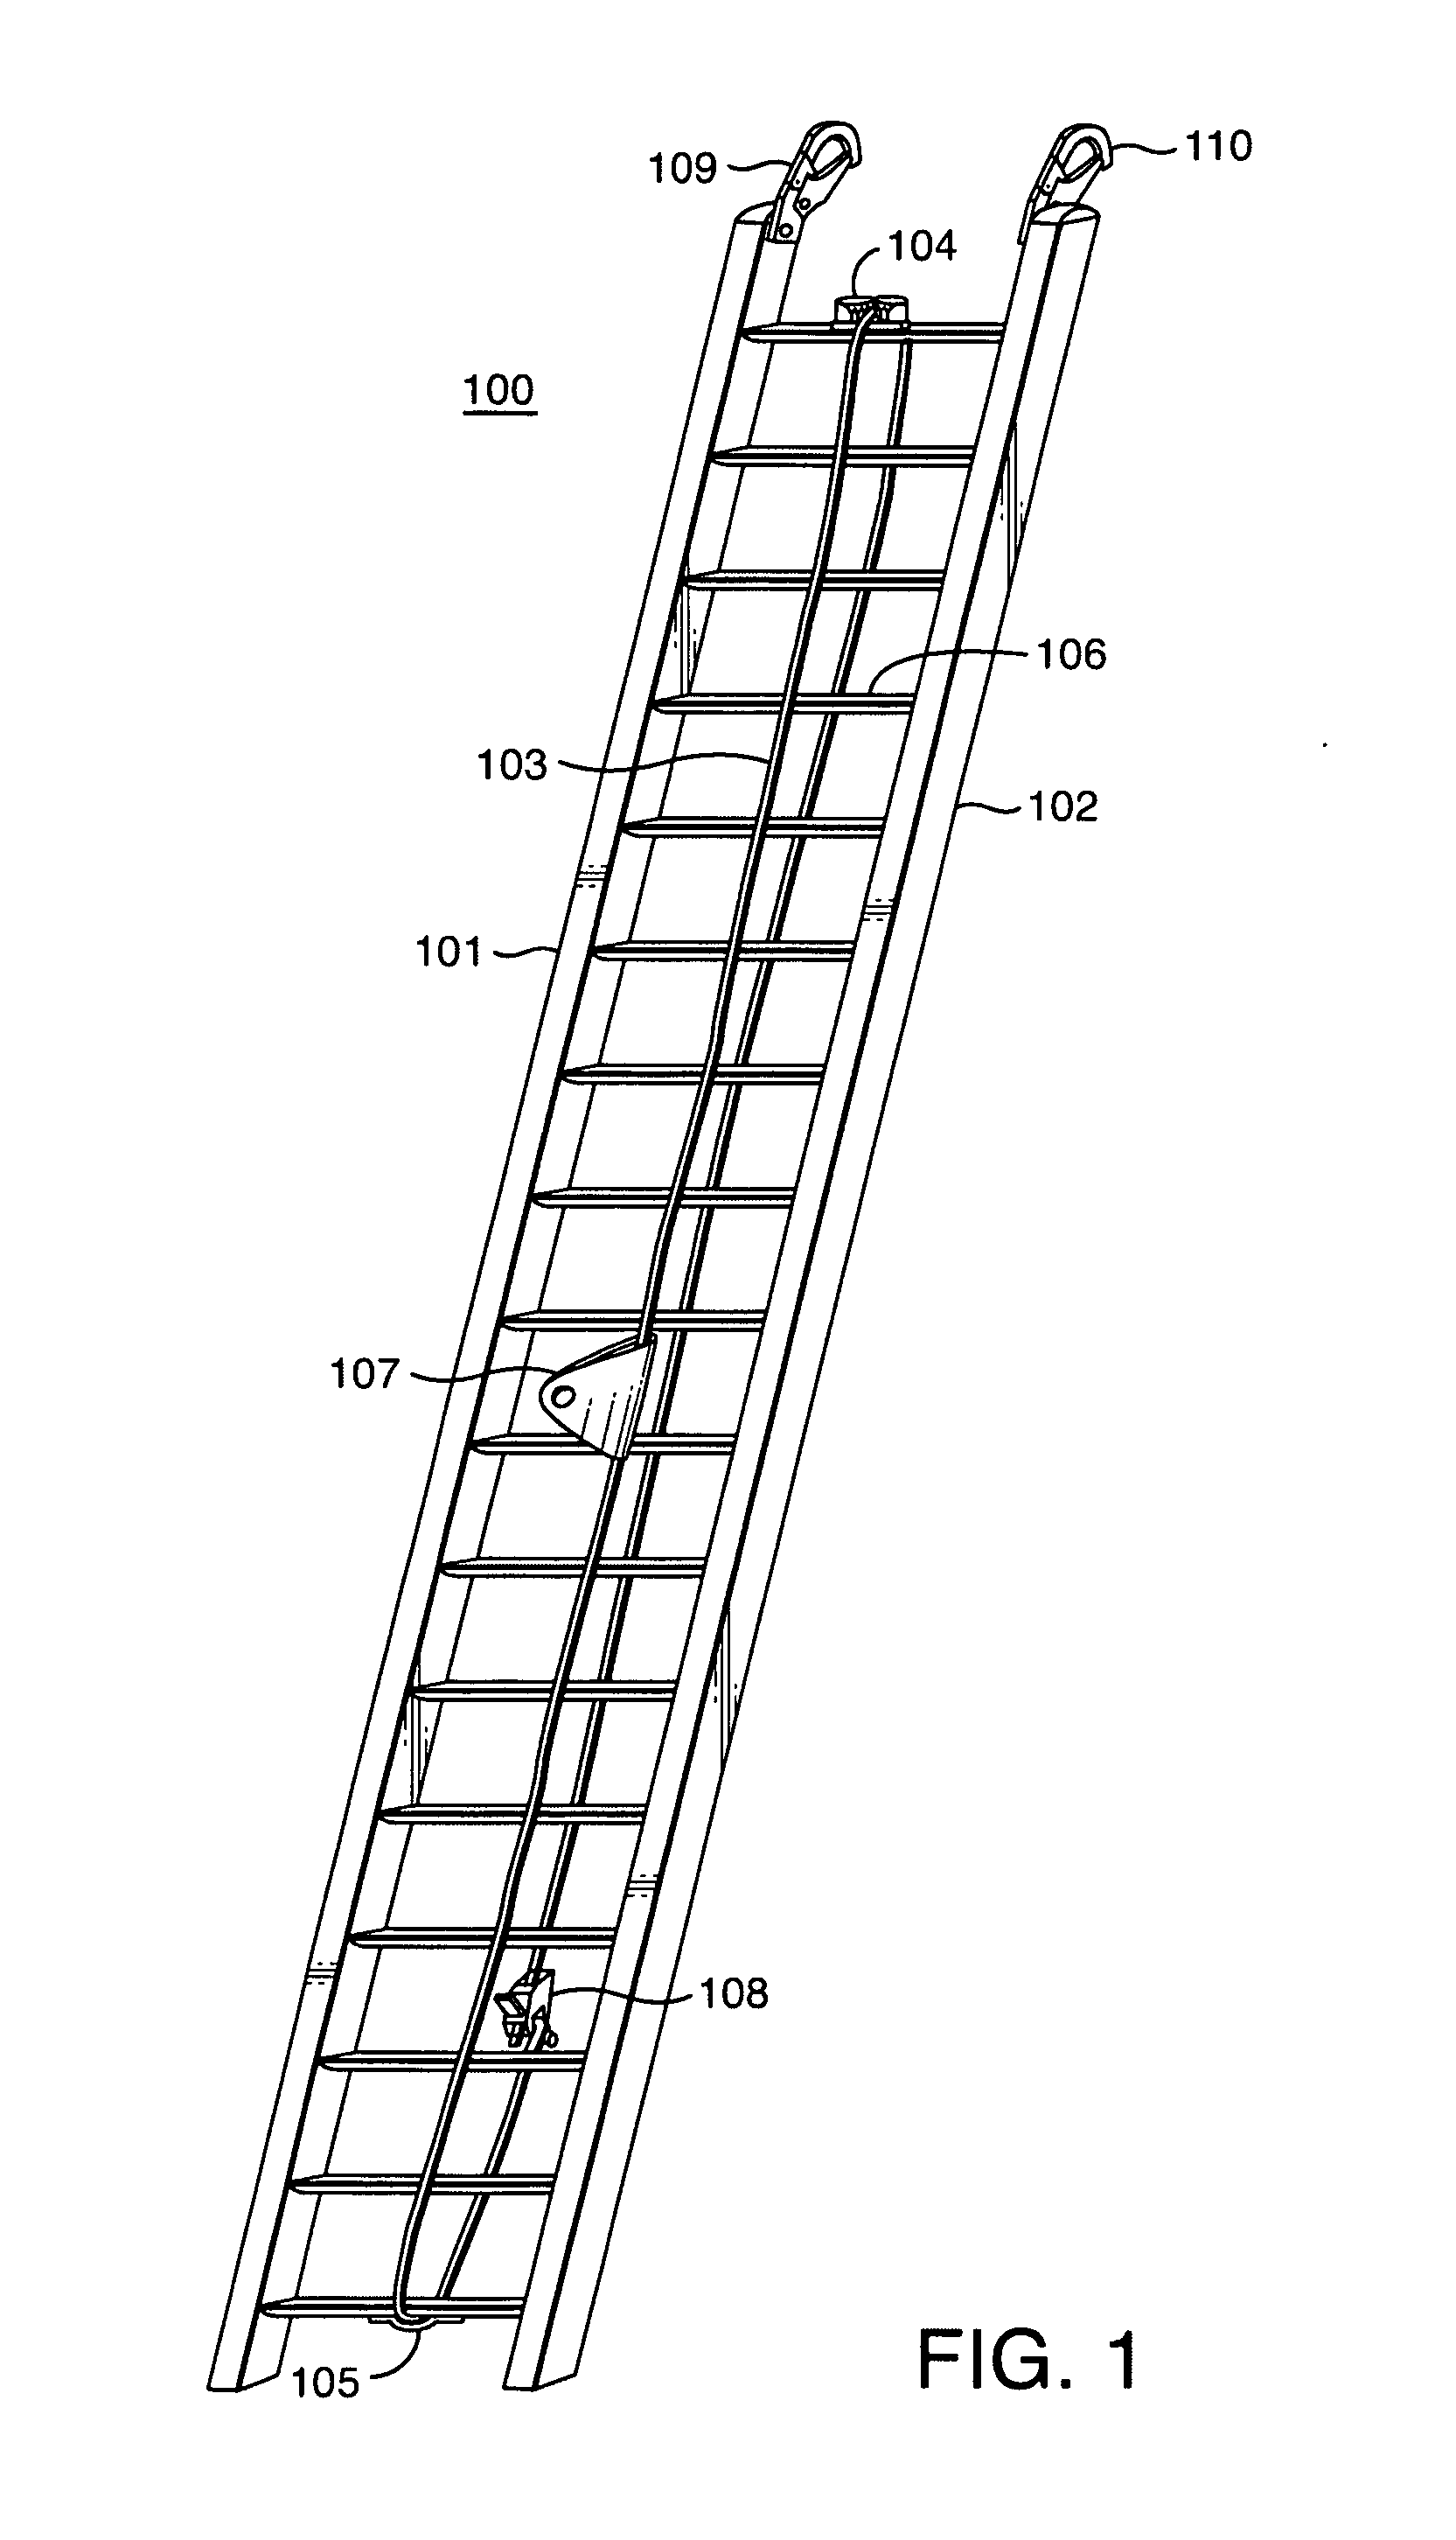 Fall-arrest ladder system